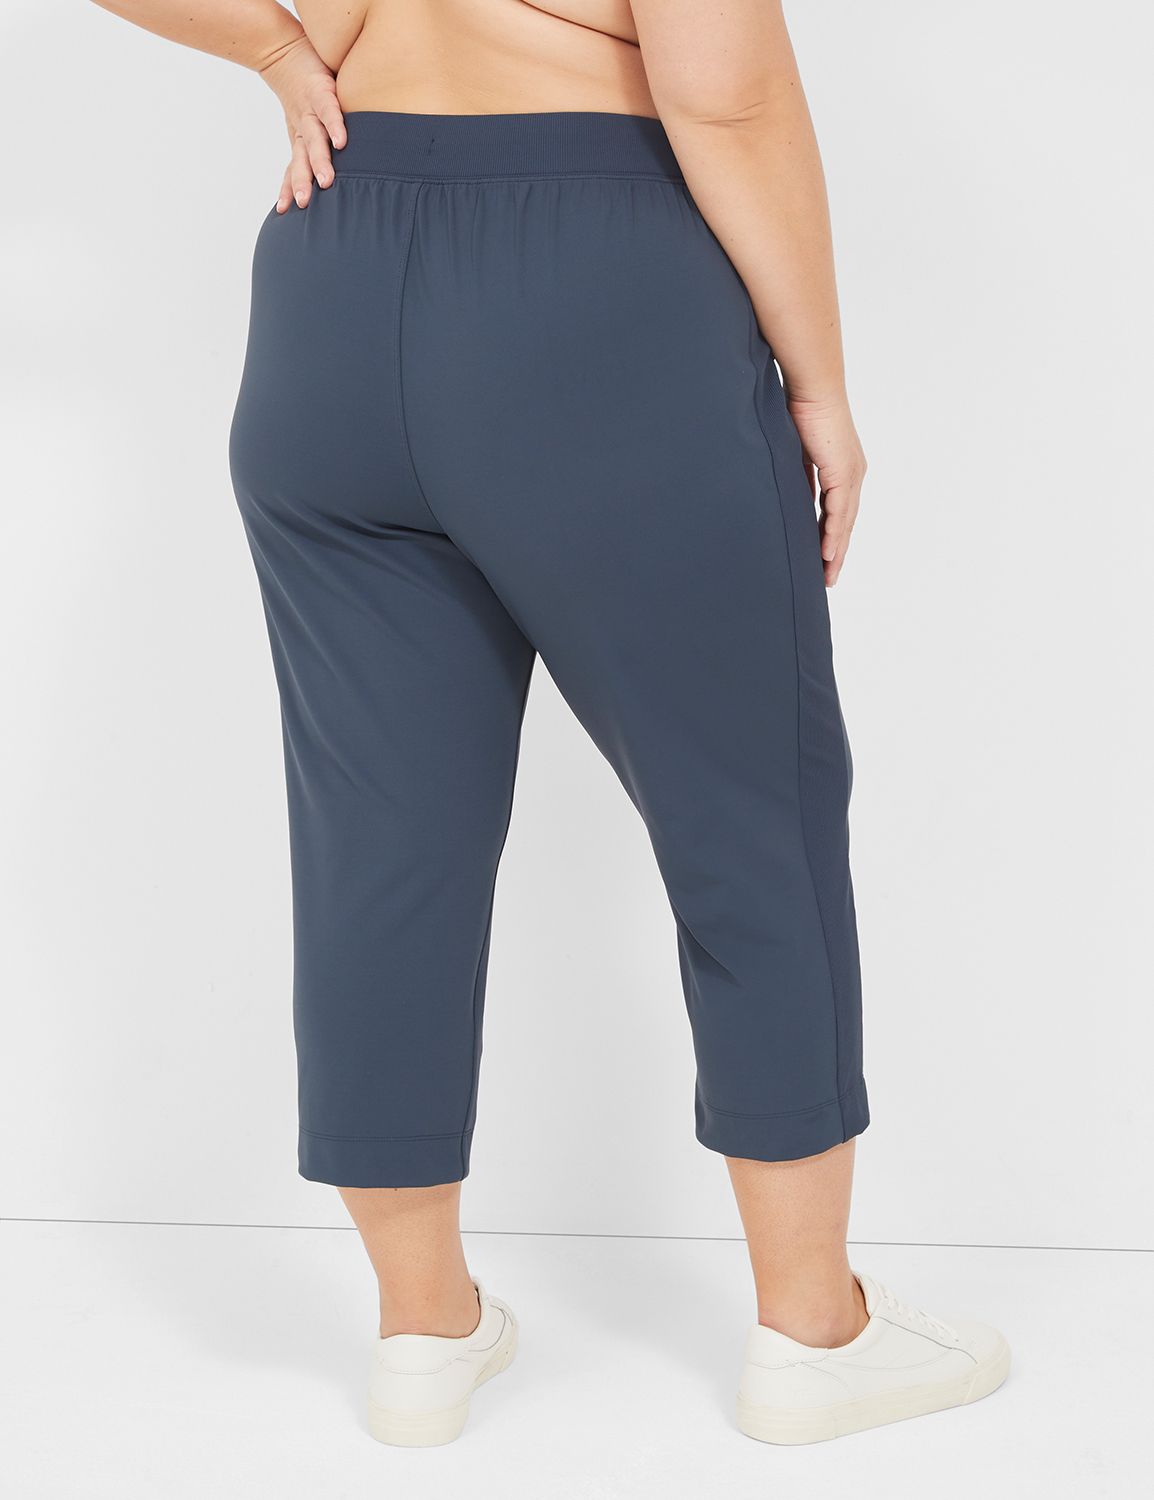 nsendm Unisex Pants Adult Yoga Pants Abs Yoga Pants with Pockets High  Waisted Workout Pants for Women plus Size Yoga Pants with Pockets  for(Khaki, L) 